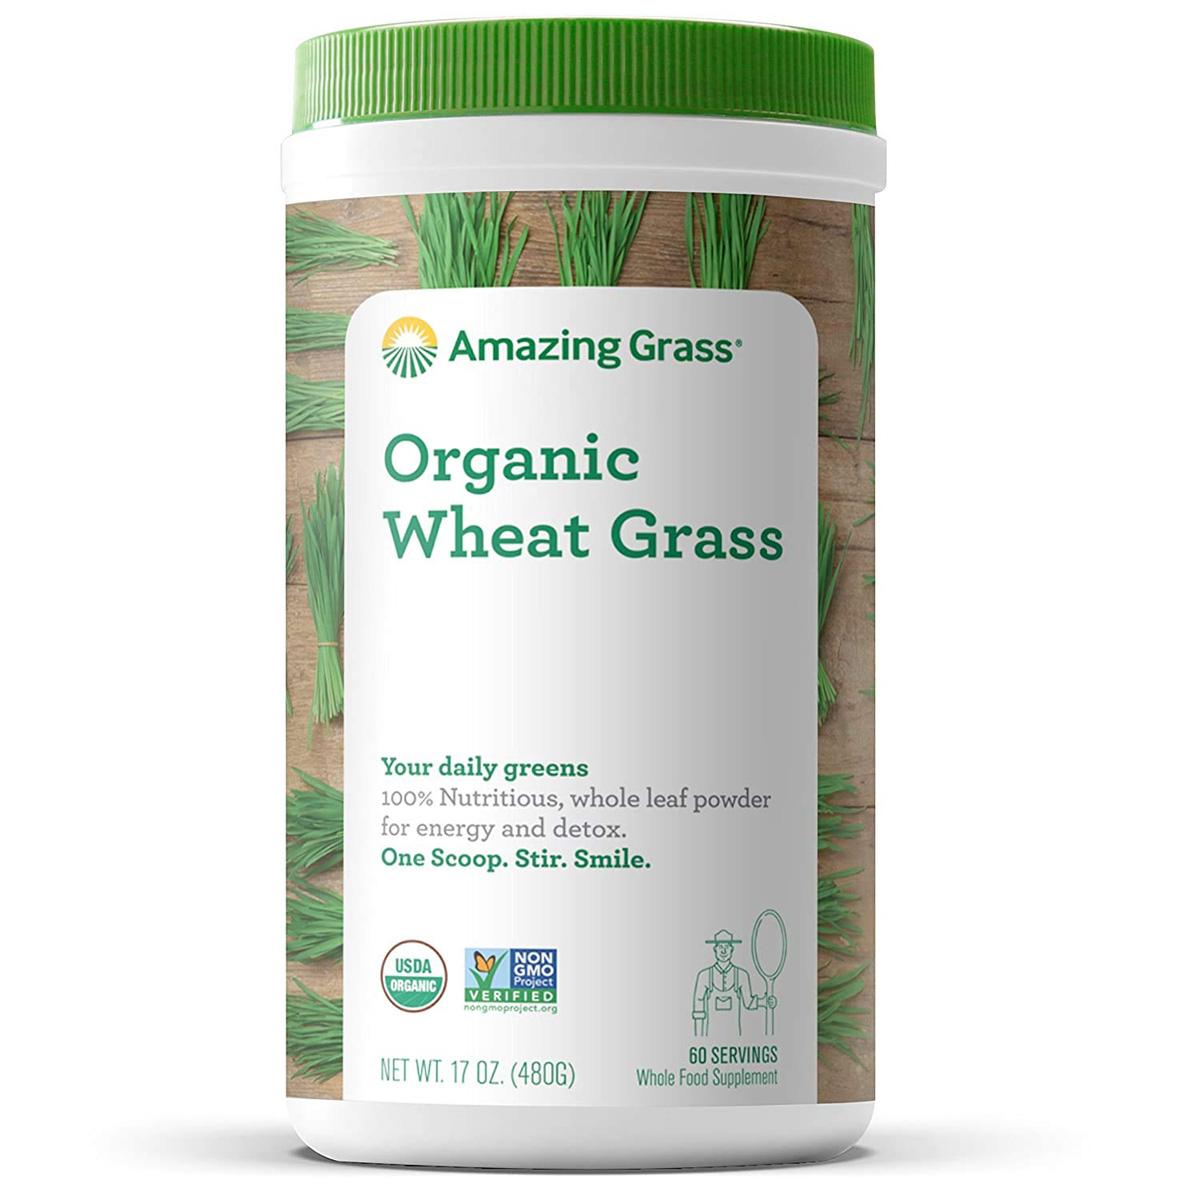 17oz Amazing Grass Organic Wheat Grass Powder for $16.37 Shipped